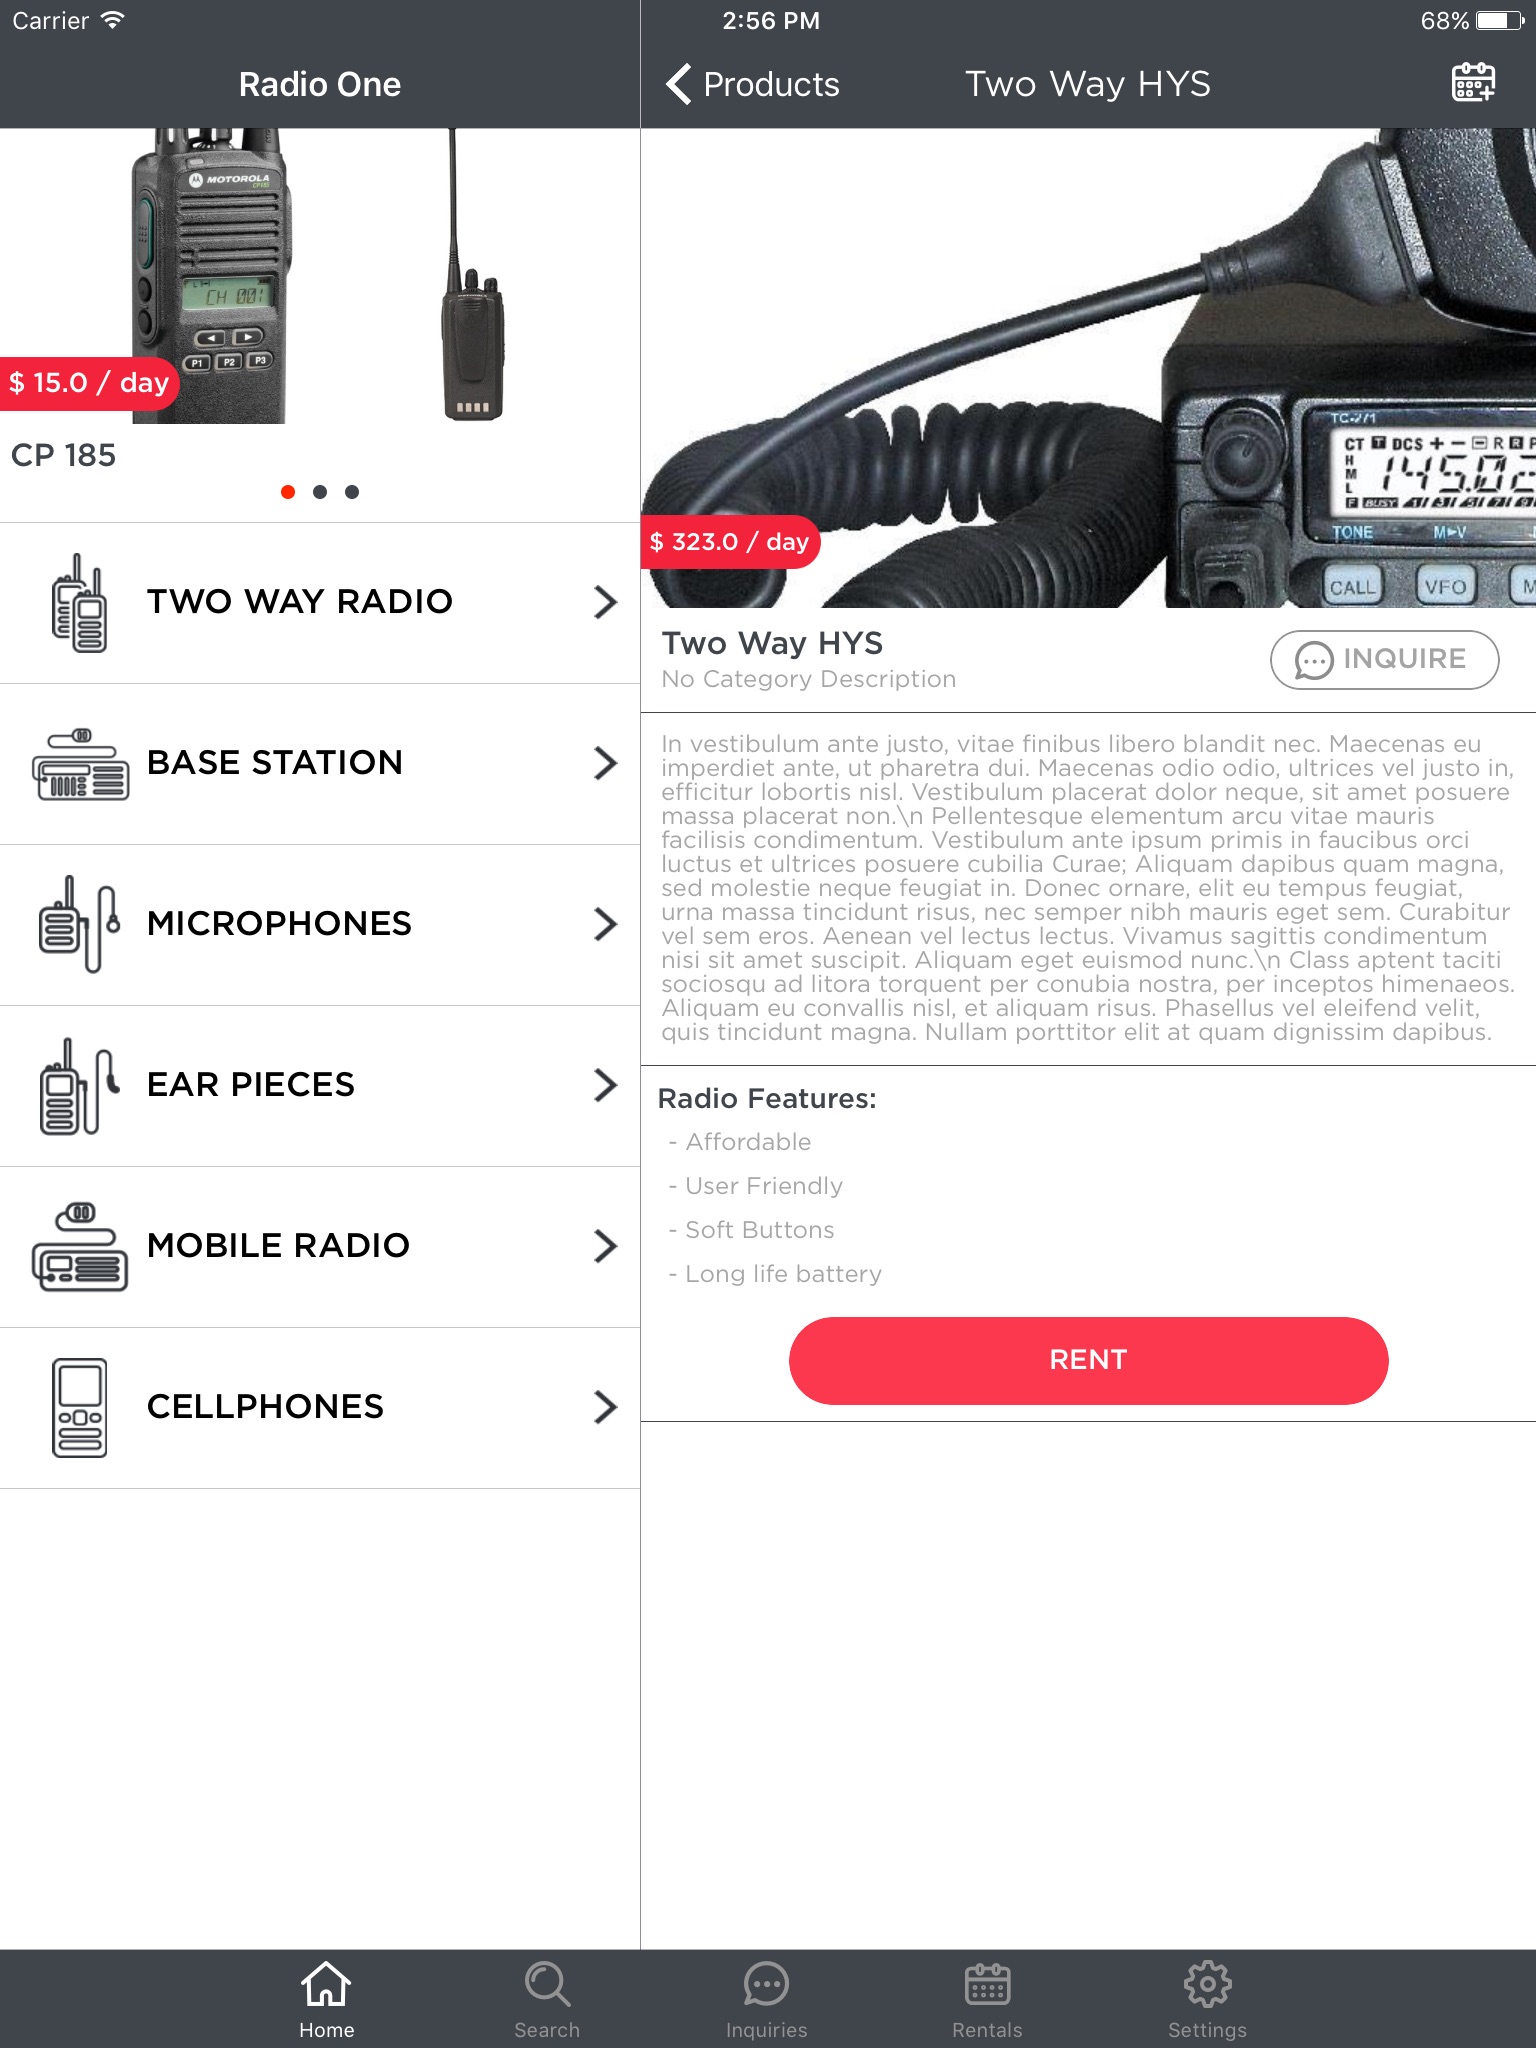 Radio One - Rent and Inquire radios from Radio1 screenshot 3